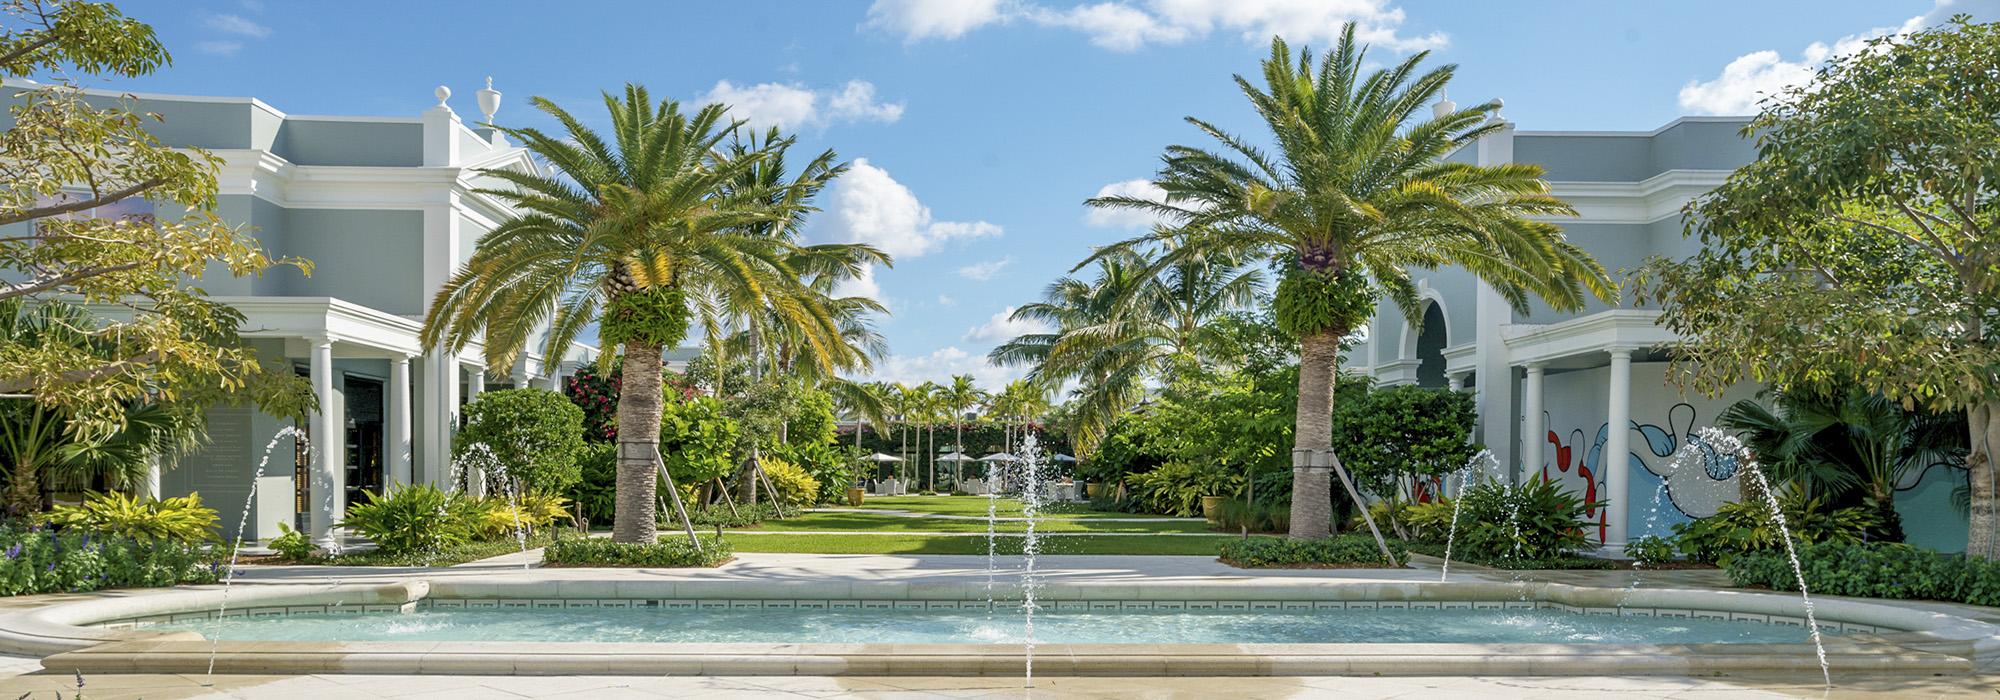 Palm Beach landscape designers to lead garden tours | The Cultural